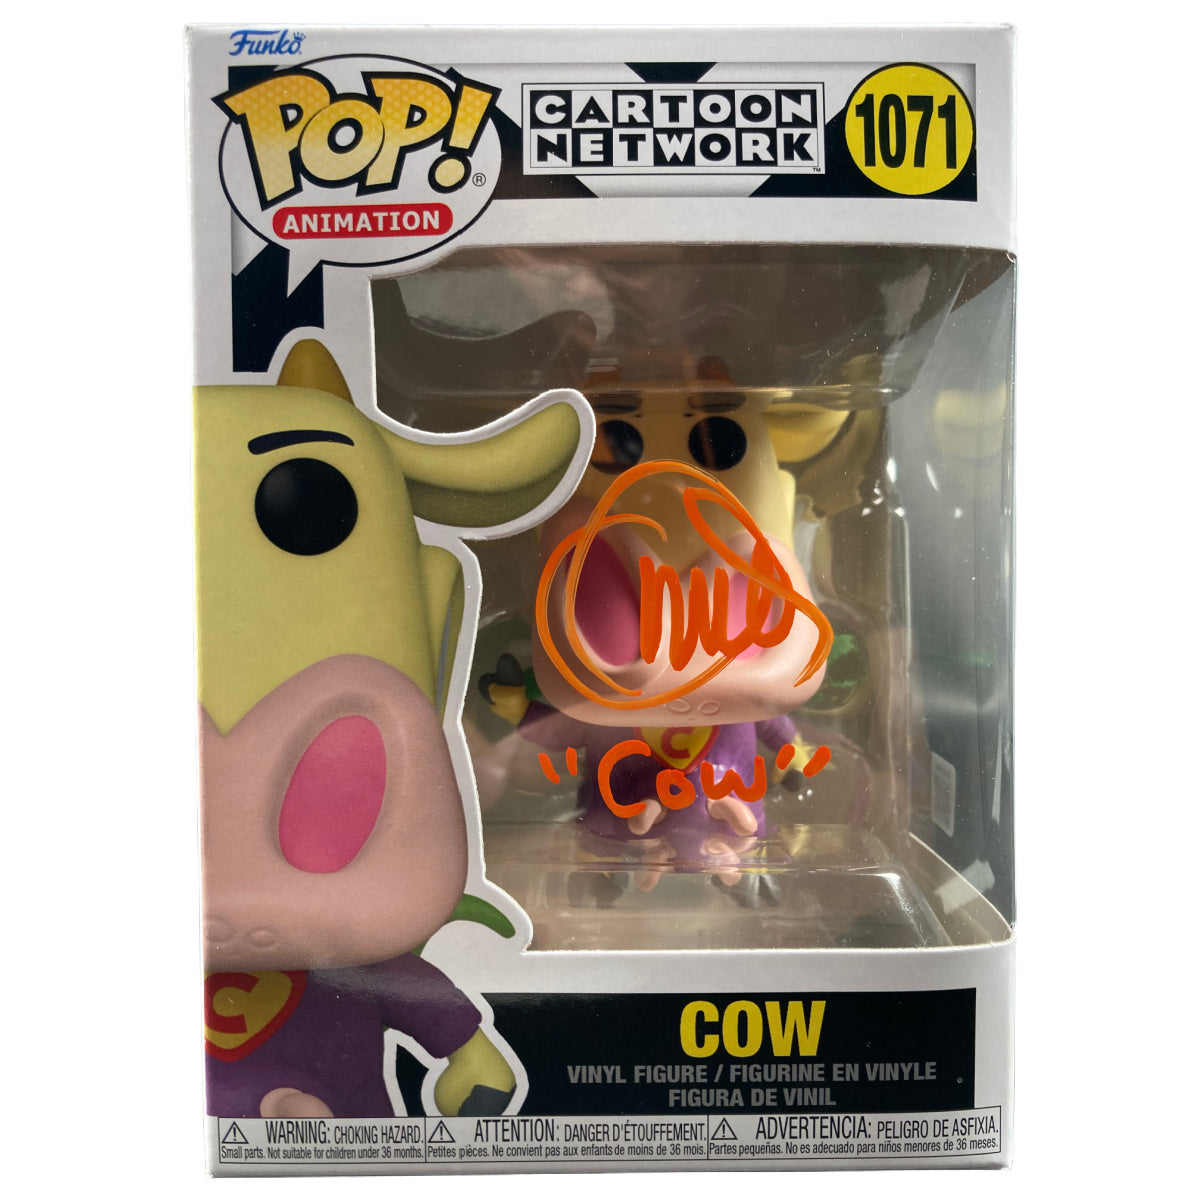 Charlie Adler Signed Funko POP Cartoon Network Cow #1071 Autographed JSA COA